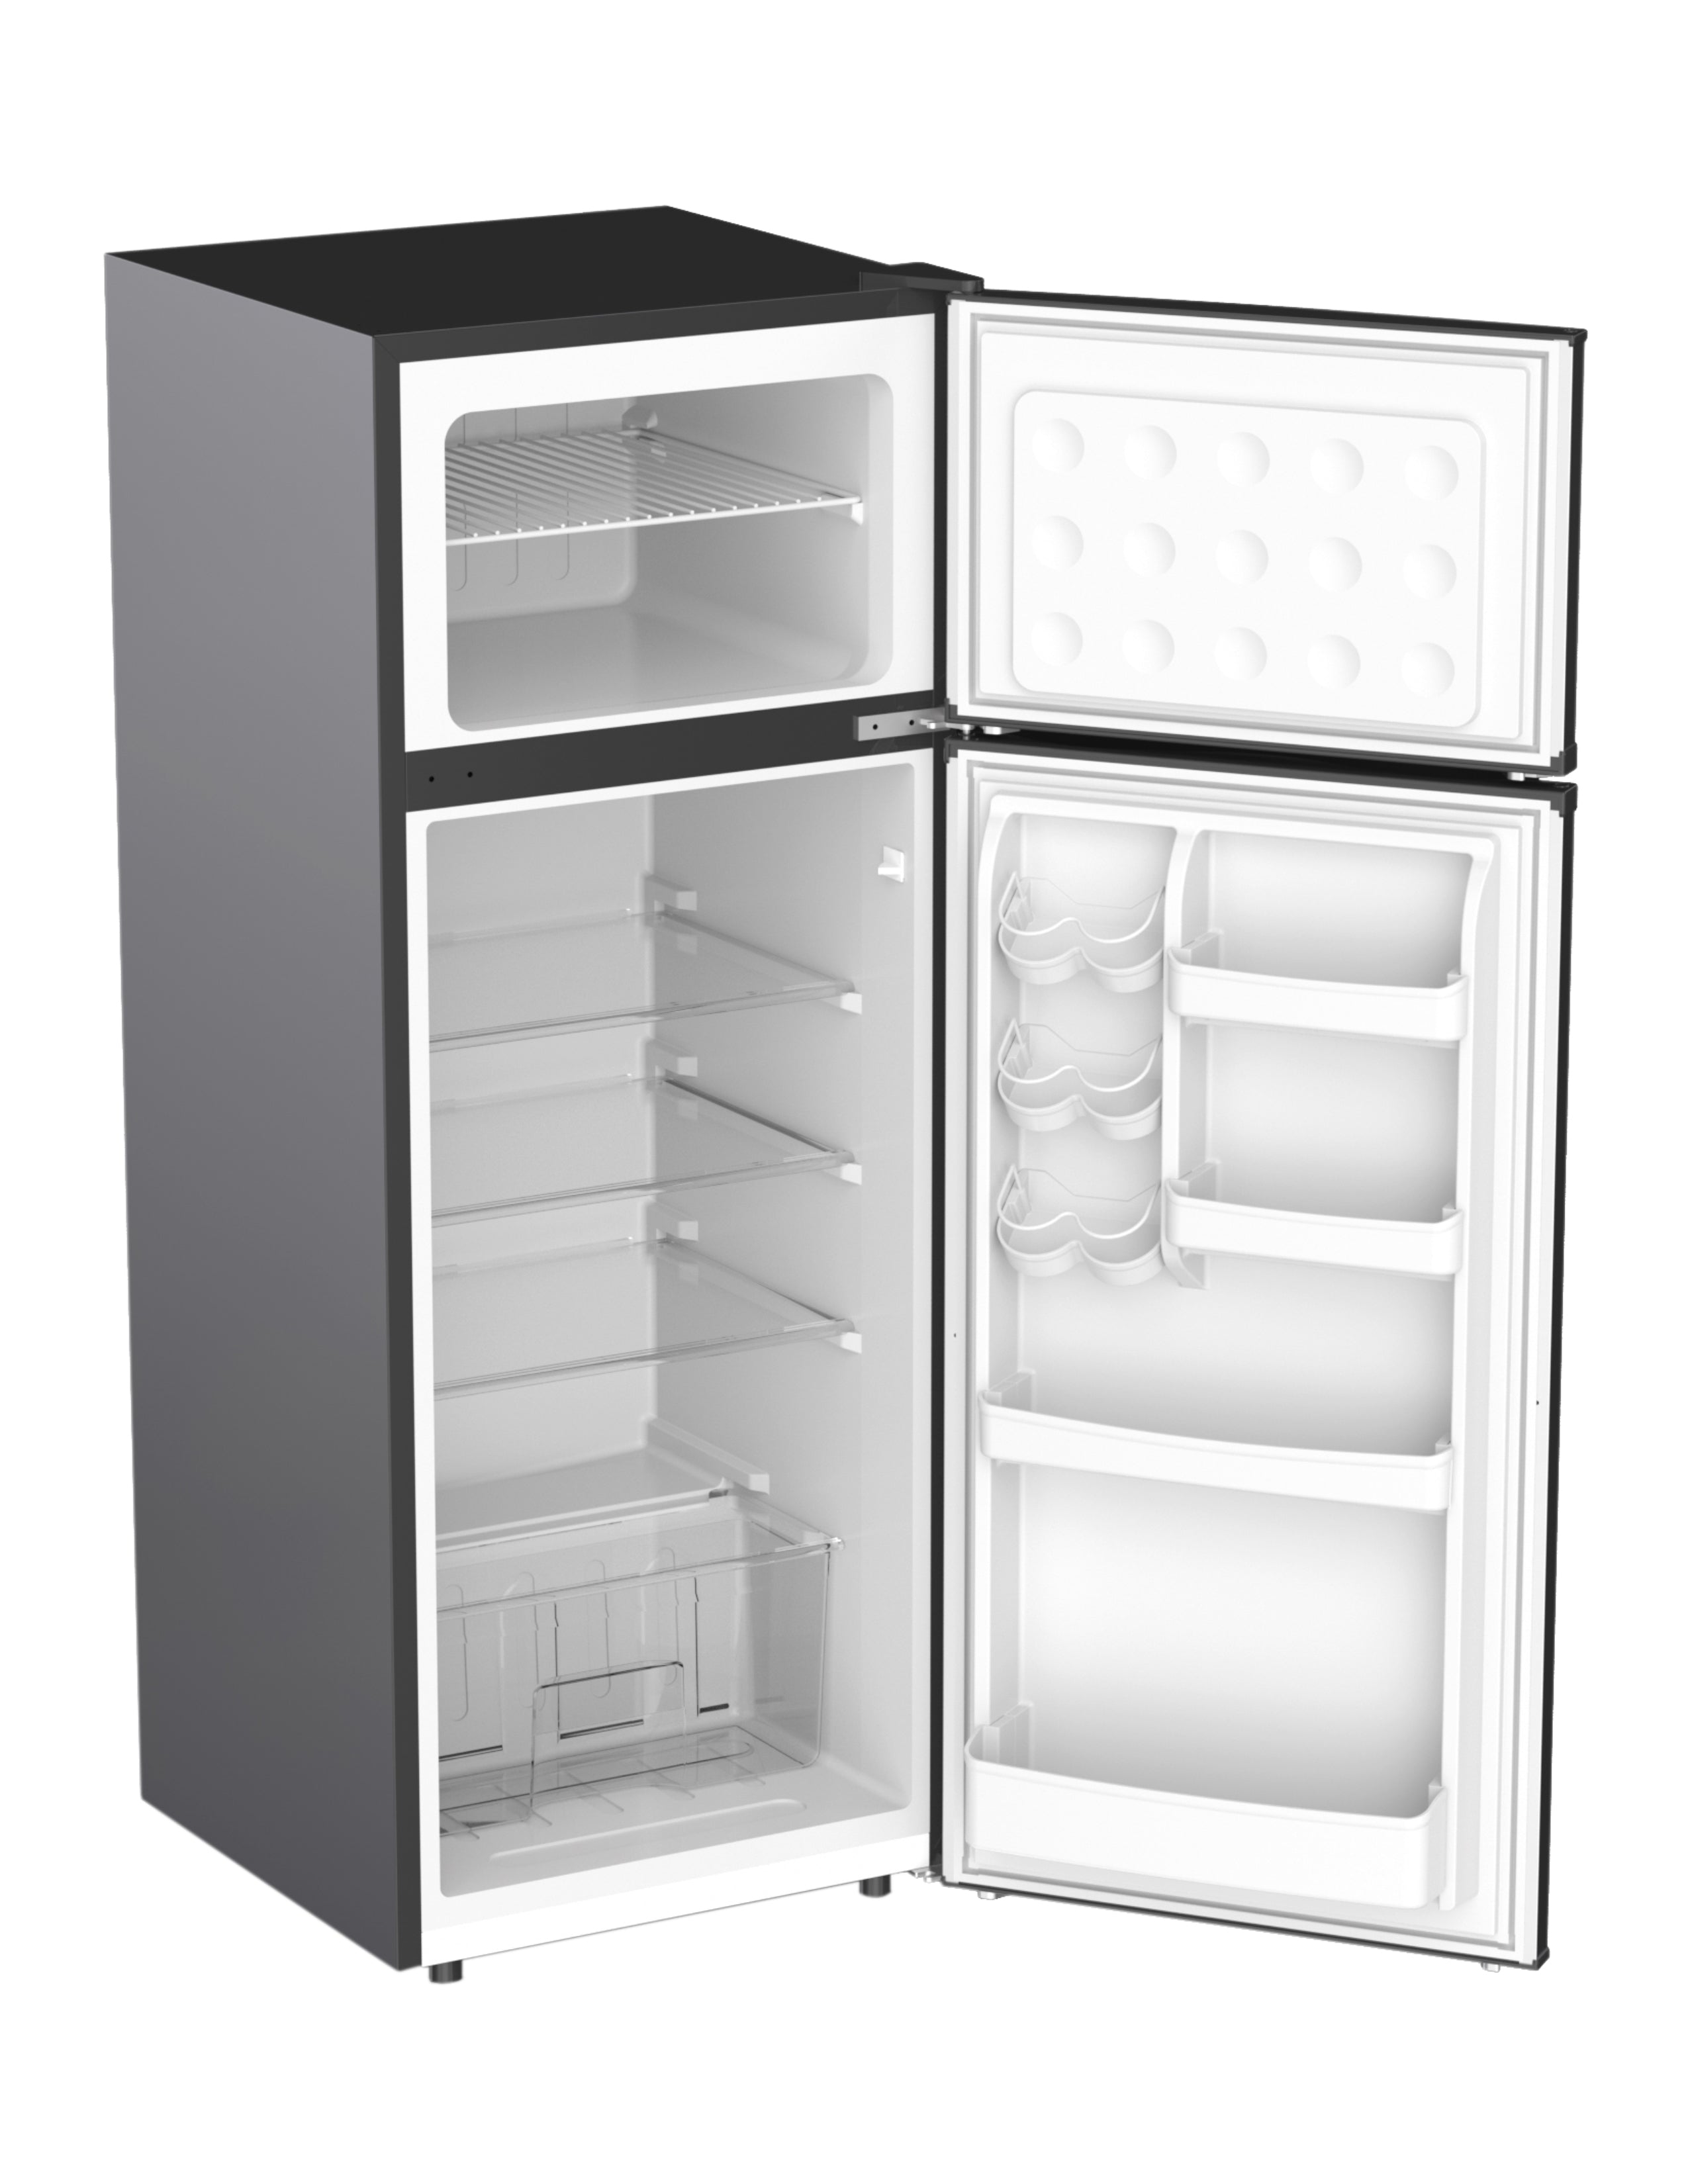 RMF-212SS/ 7.5 Cu.ft Top-Freezer Refrigerator